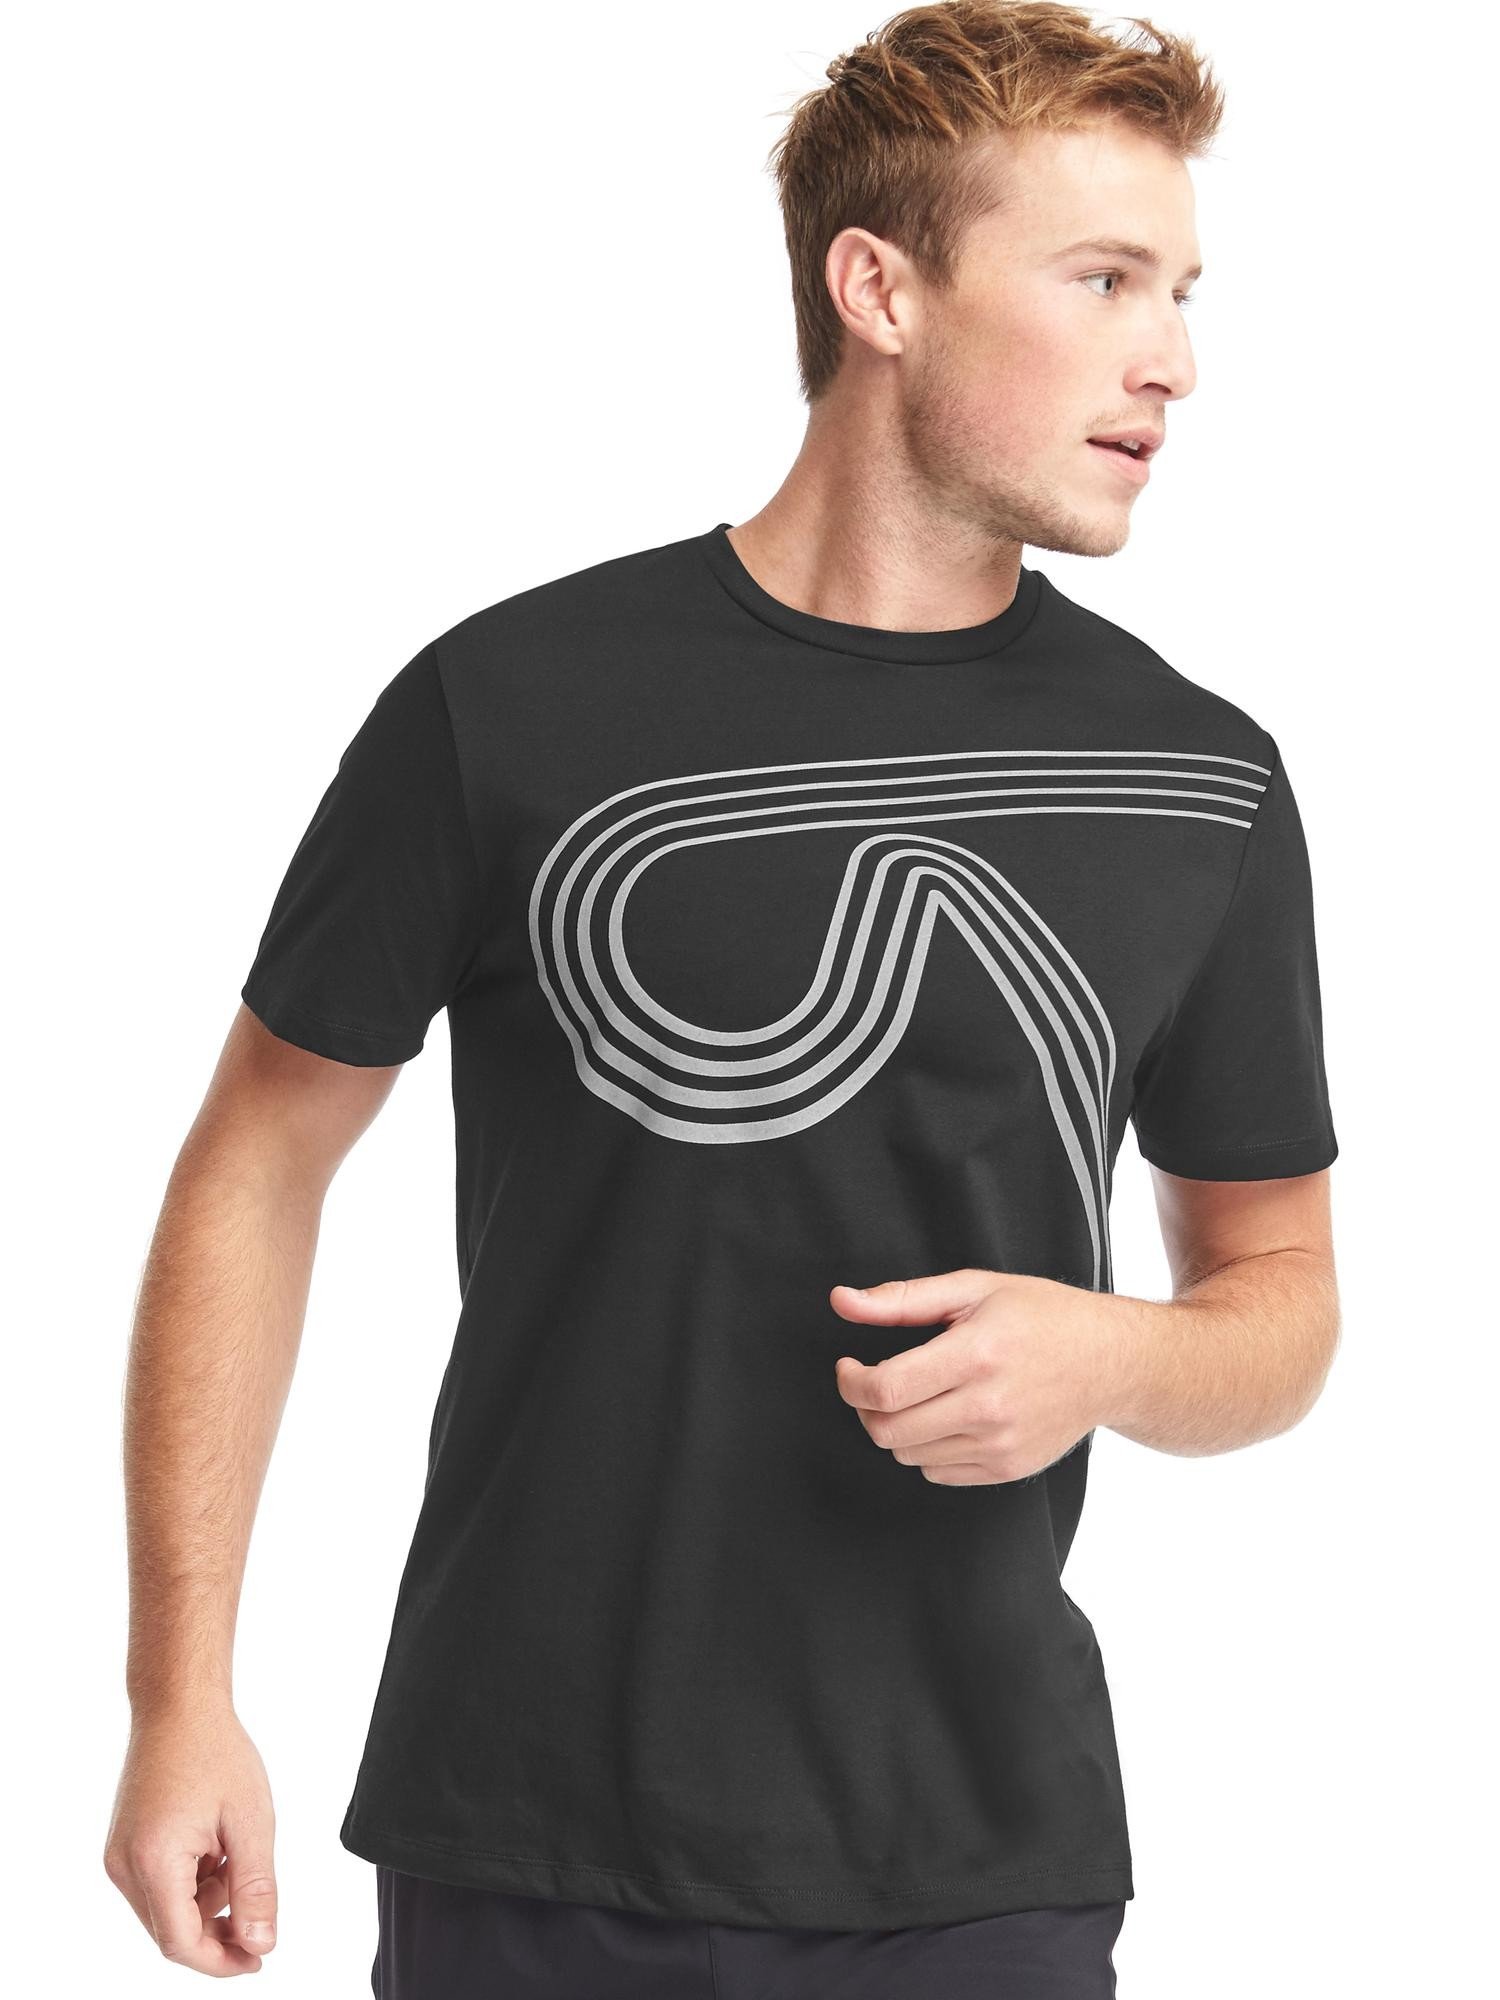 GDry grafik desenli t-shirt product image